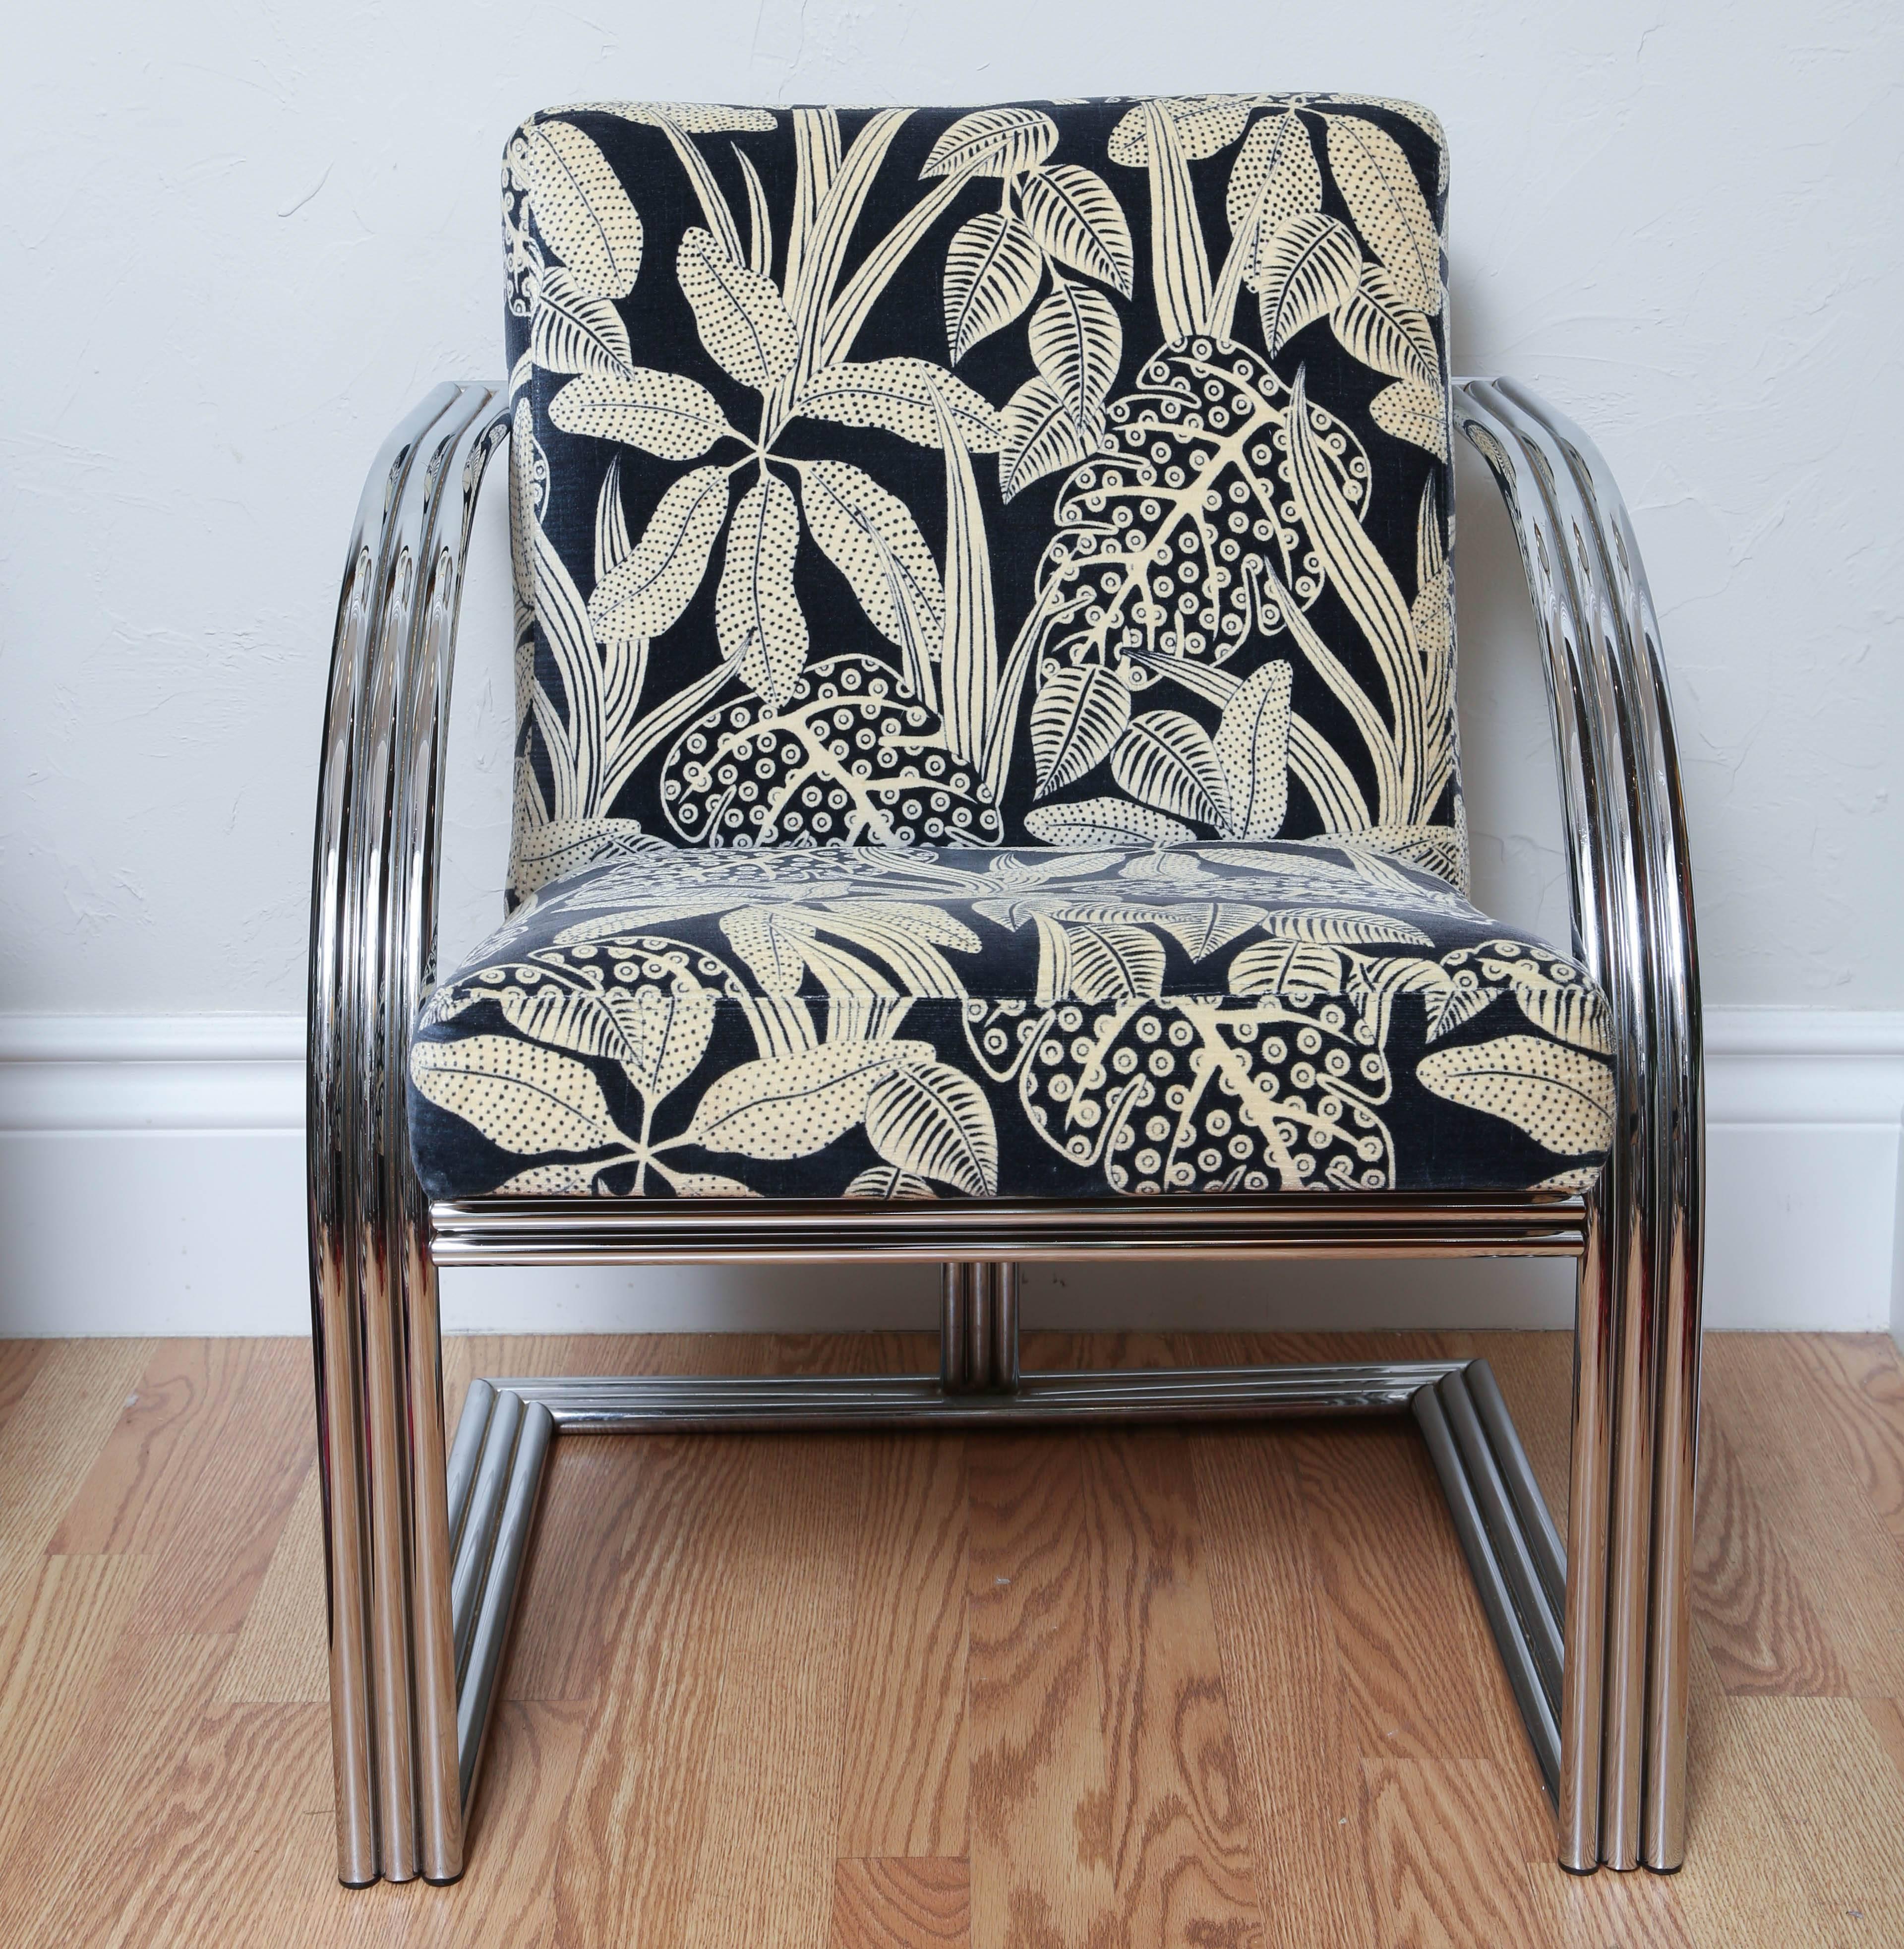 Art Deco style triple chrome band armchair by Milo Baughman for Thayer Coggin. Original fabric.